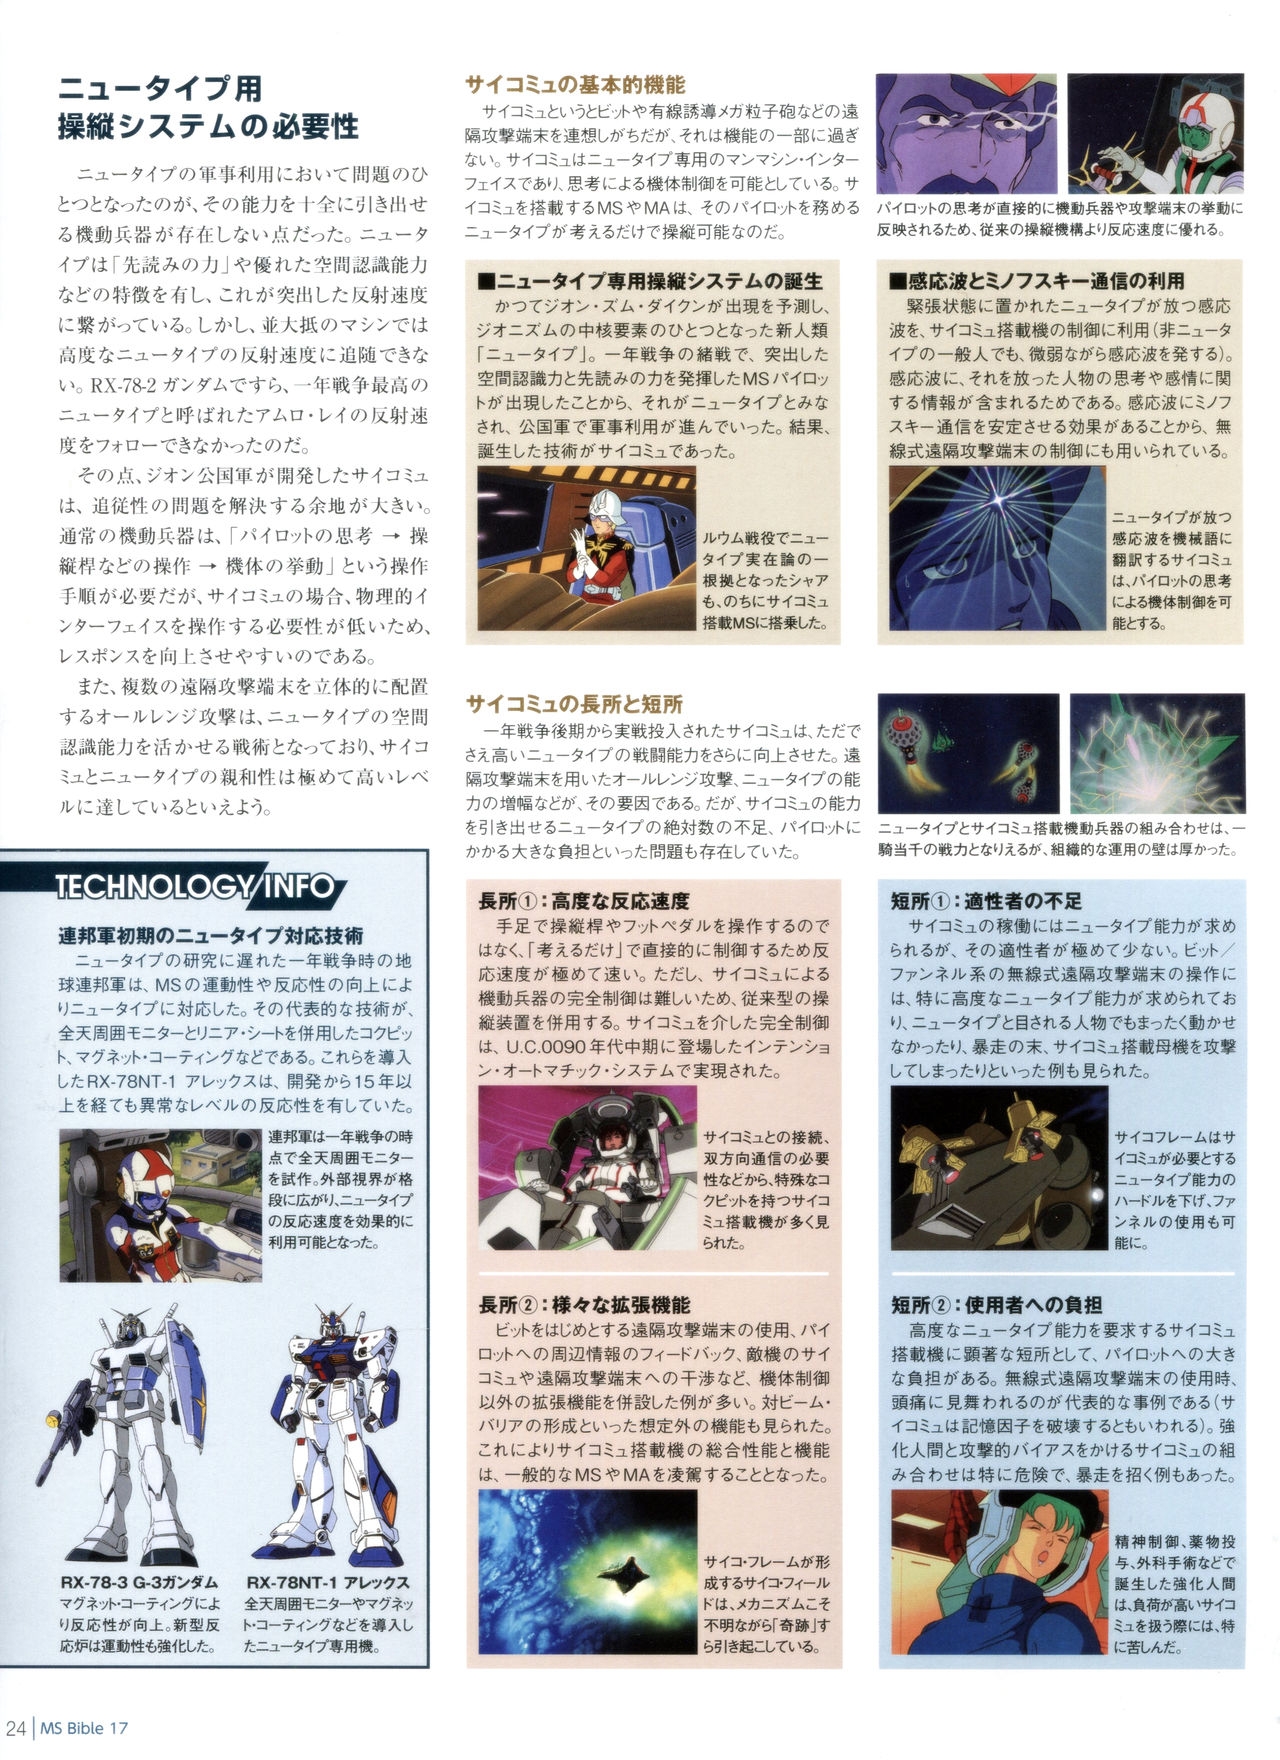 Gundam Mobile Suit Bible 17 25